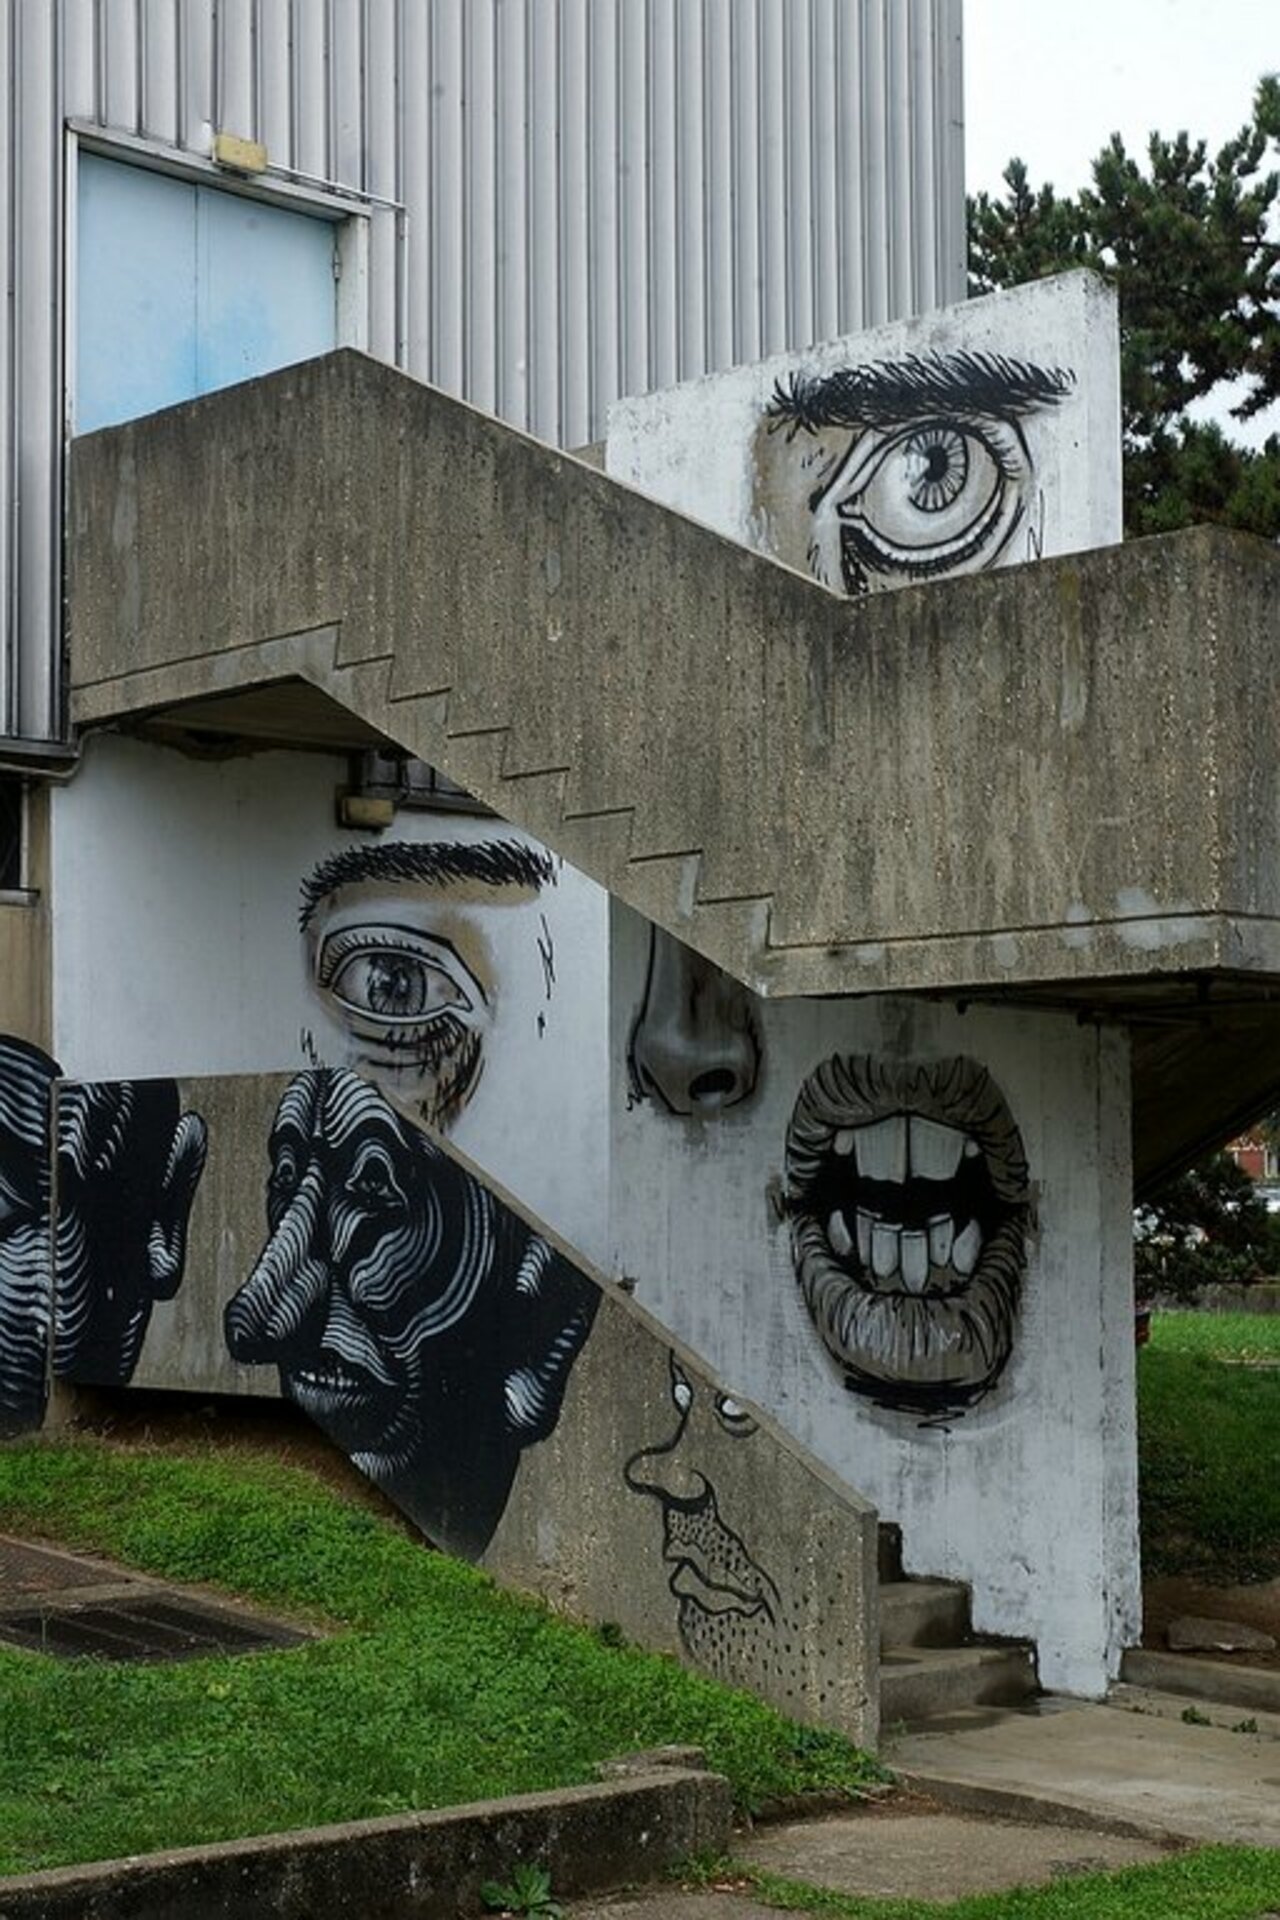 Street Art by anonymous in #Vitry-sur-Seine http://www.urbacolors.com #art #mural #graffiti #streetart https://t.co/JeXRGRVLbo